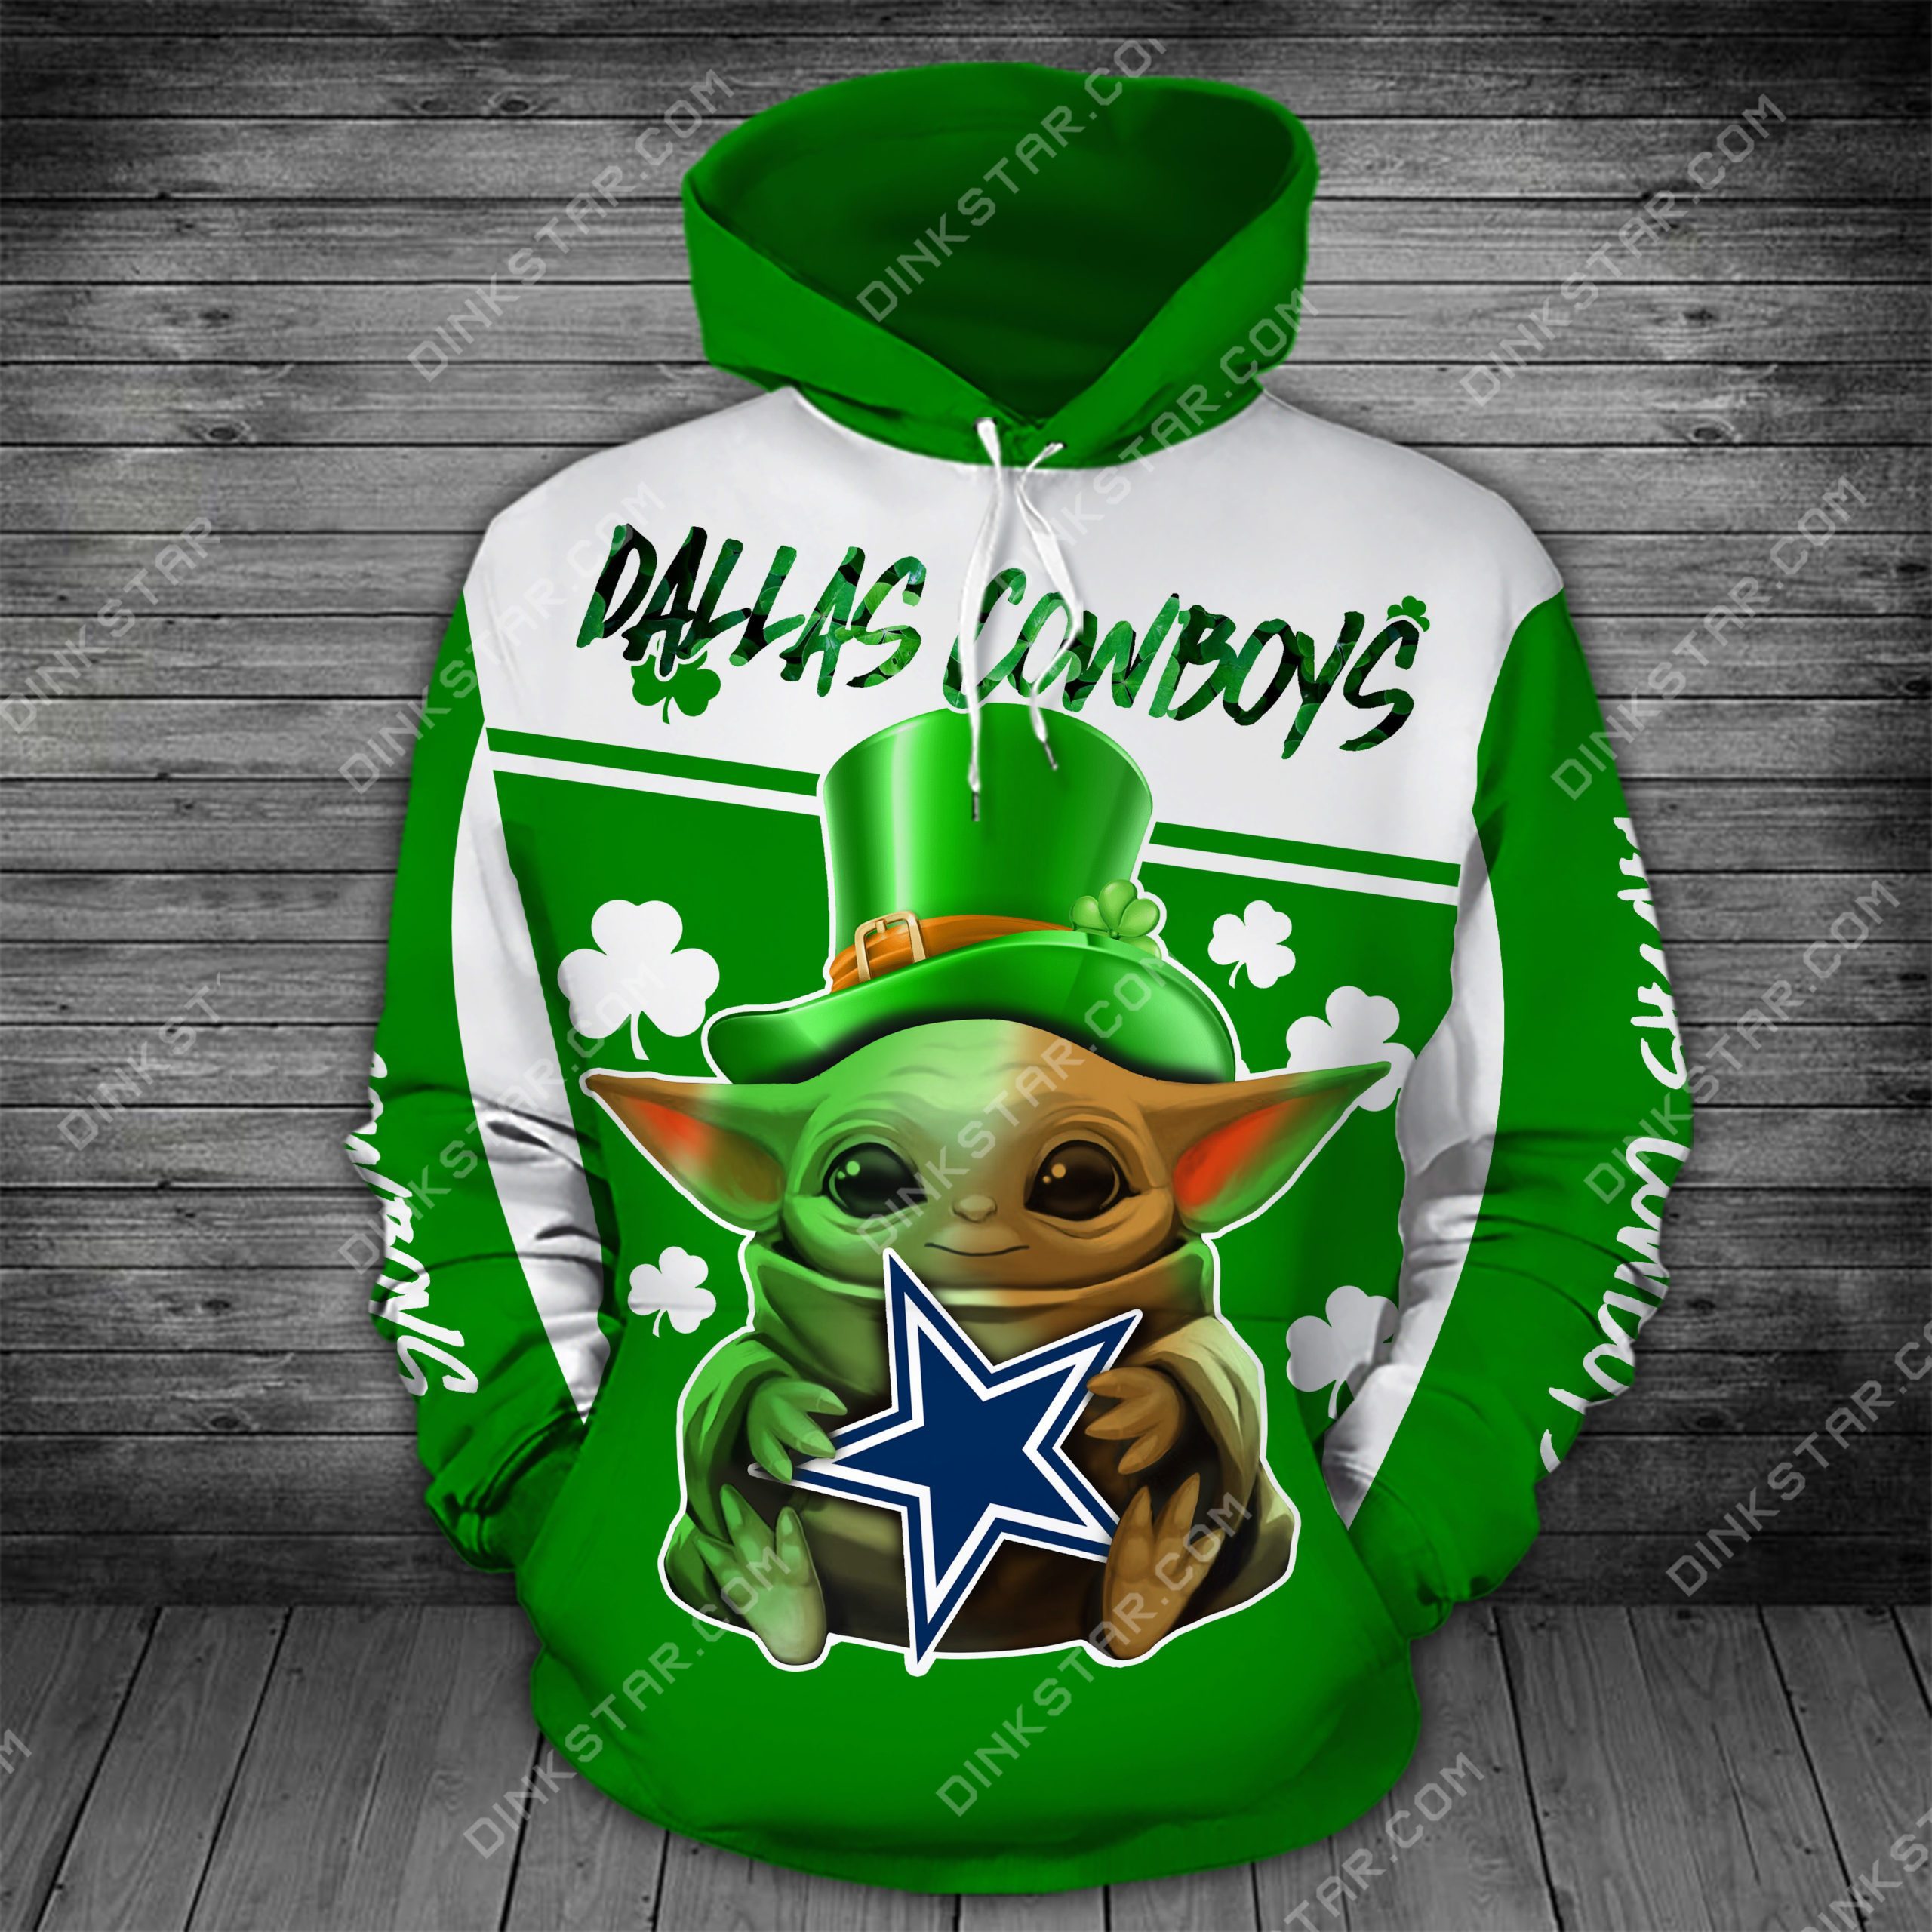 Dallas cowboys baby yoda saint patrick's day full printing hoodie